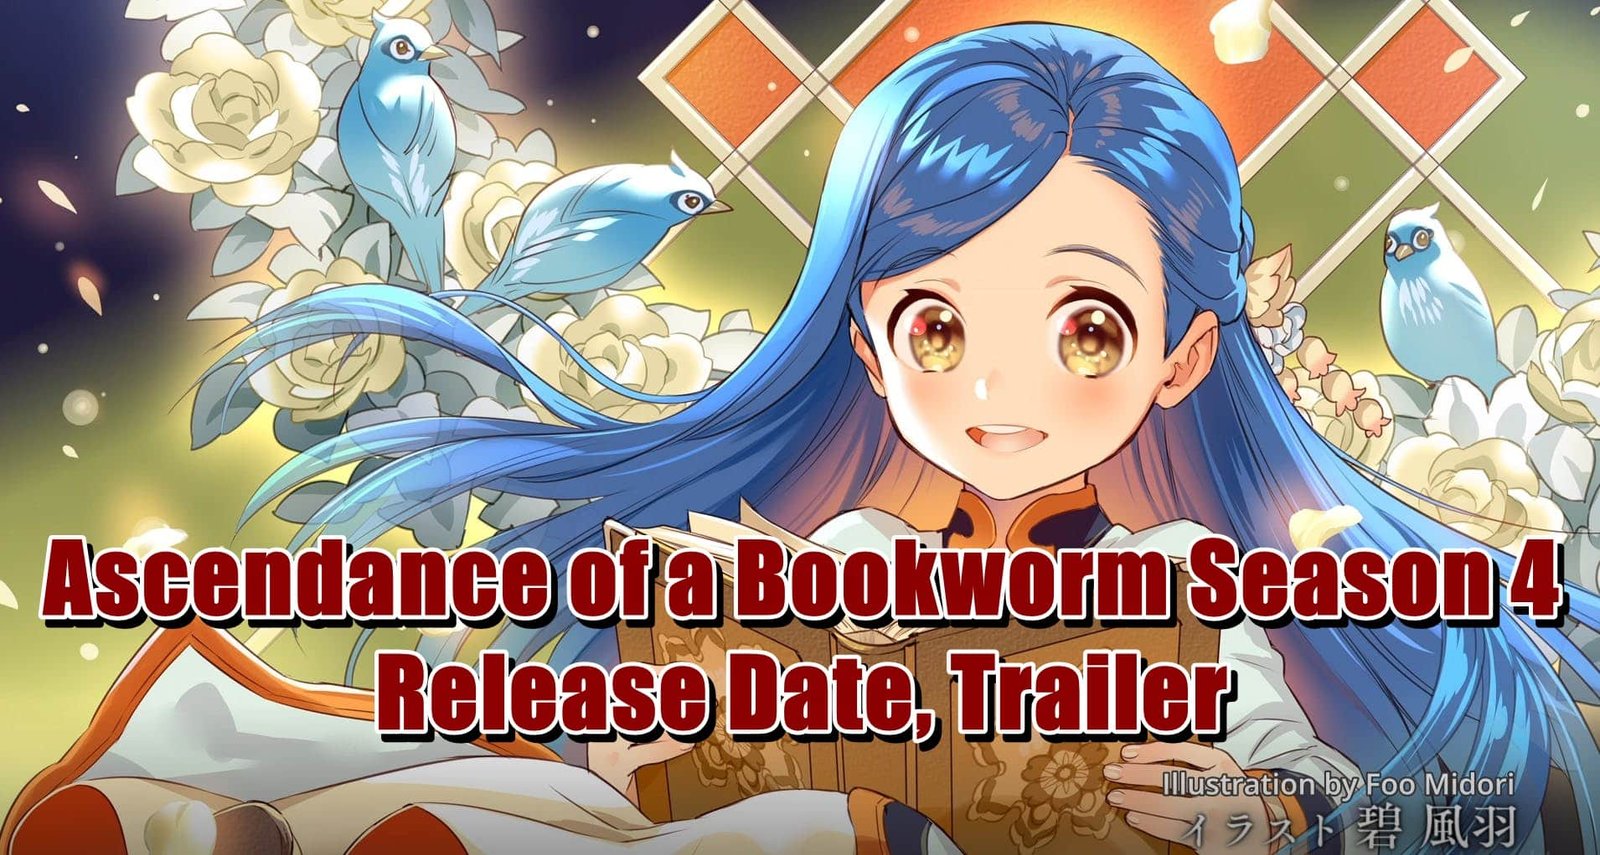 Ascendance of a Bookworm Season 4 Release Date, Trailer